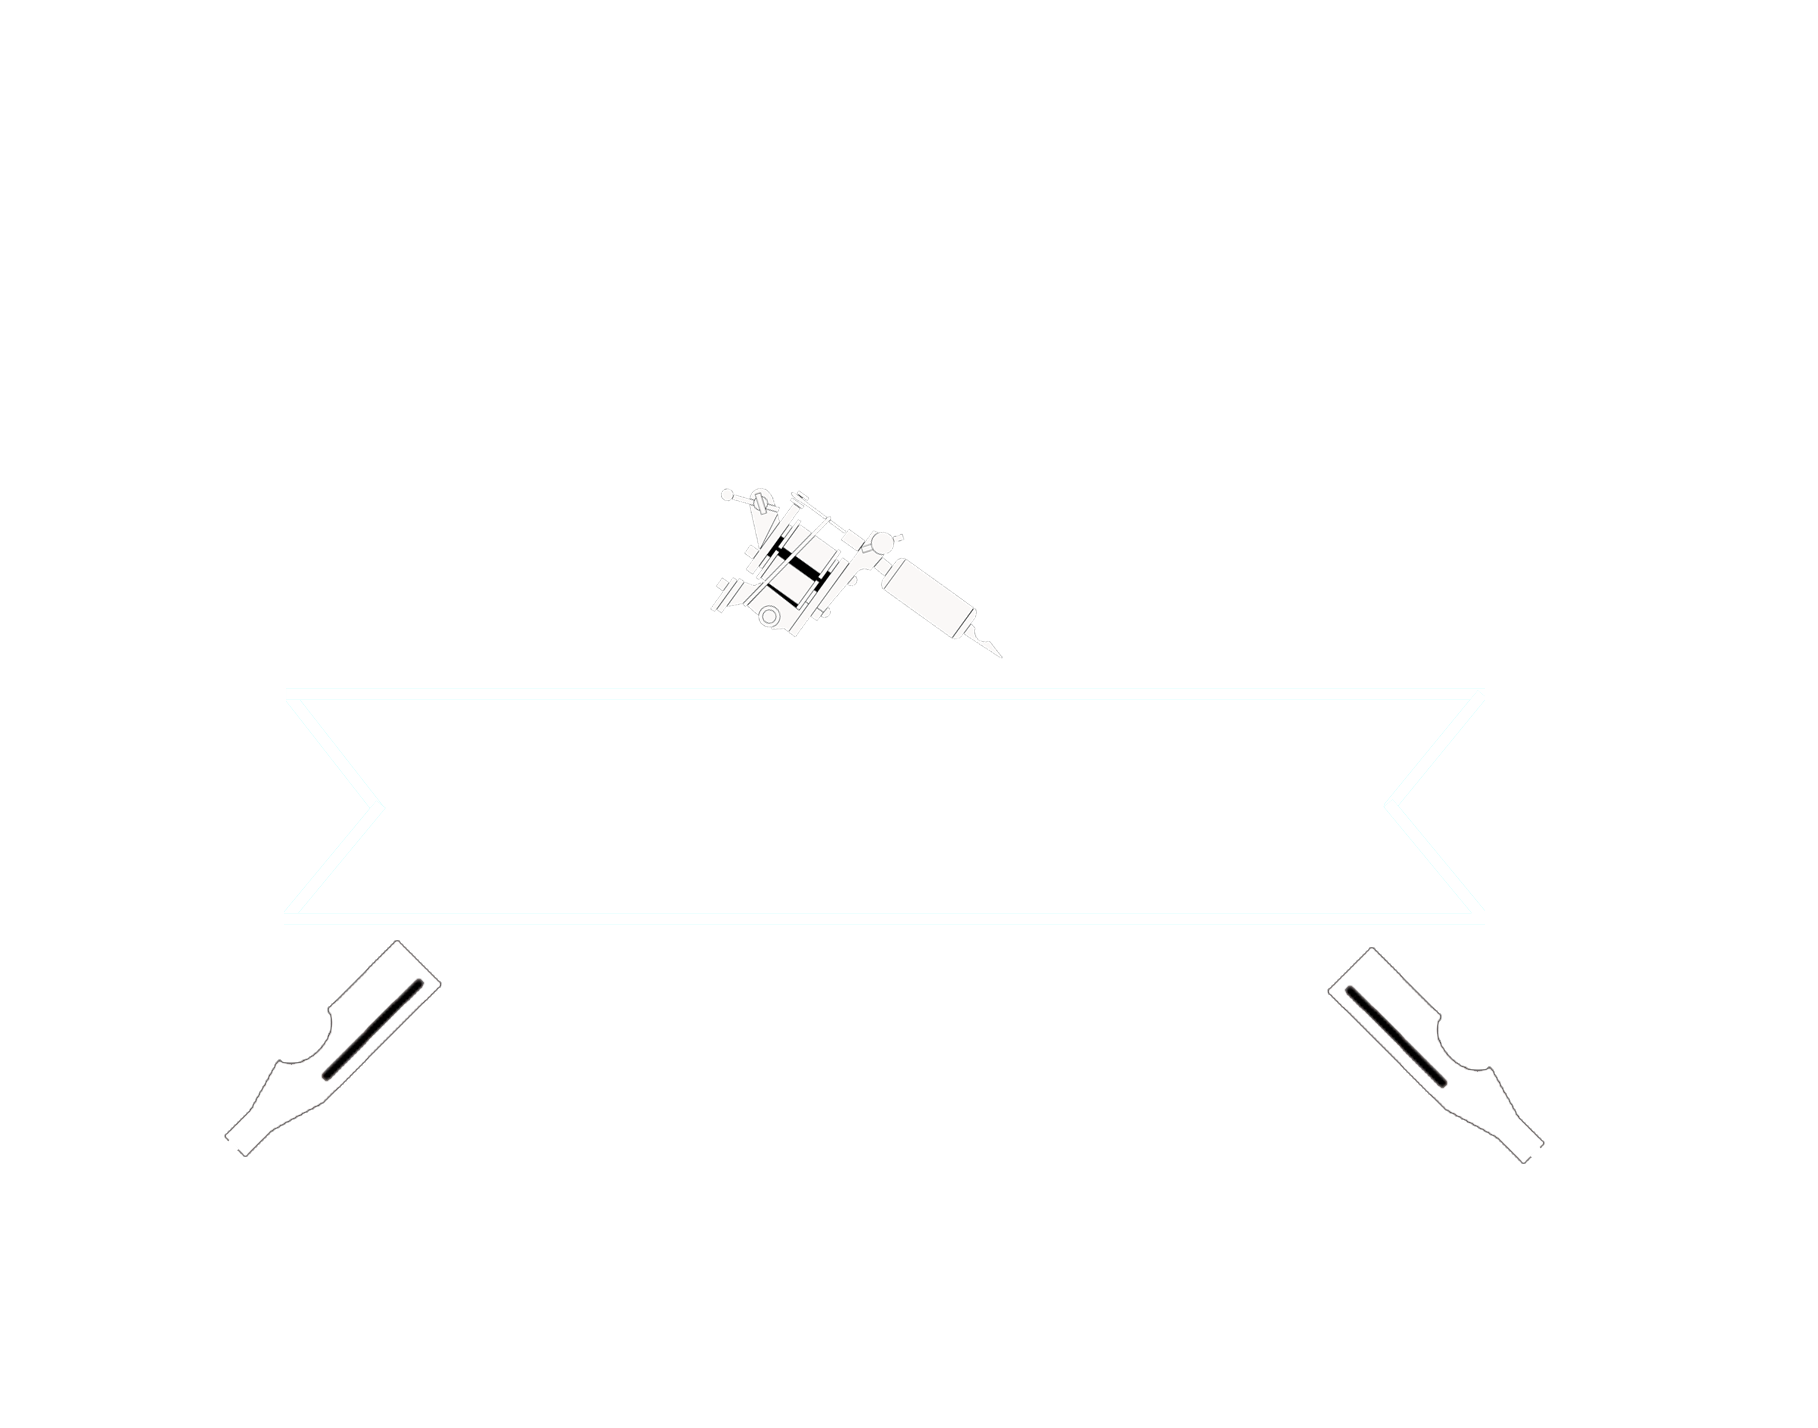 Alan's Tattoo Studio